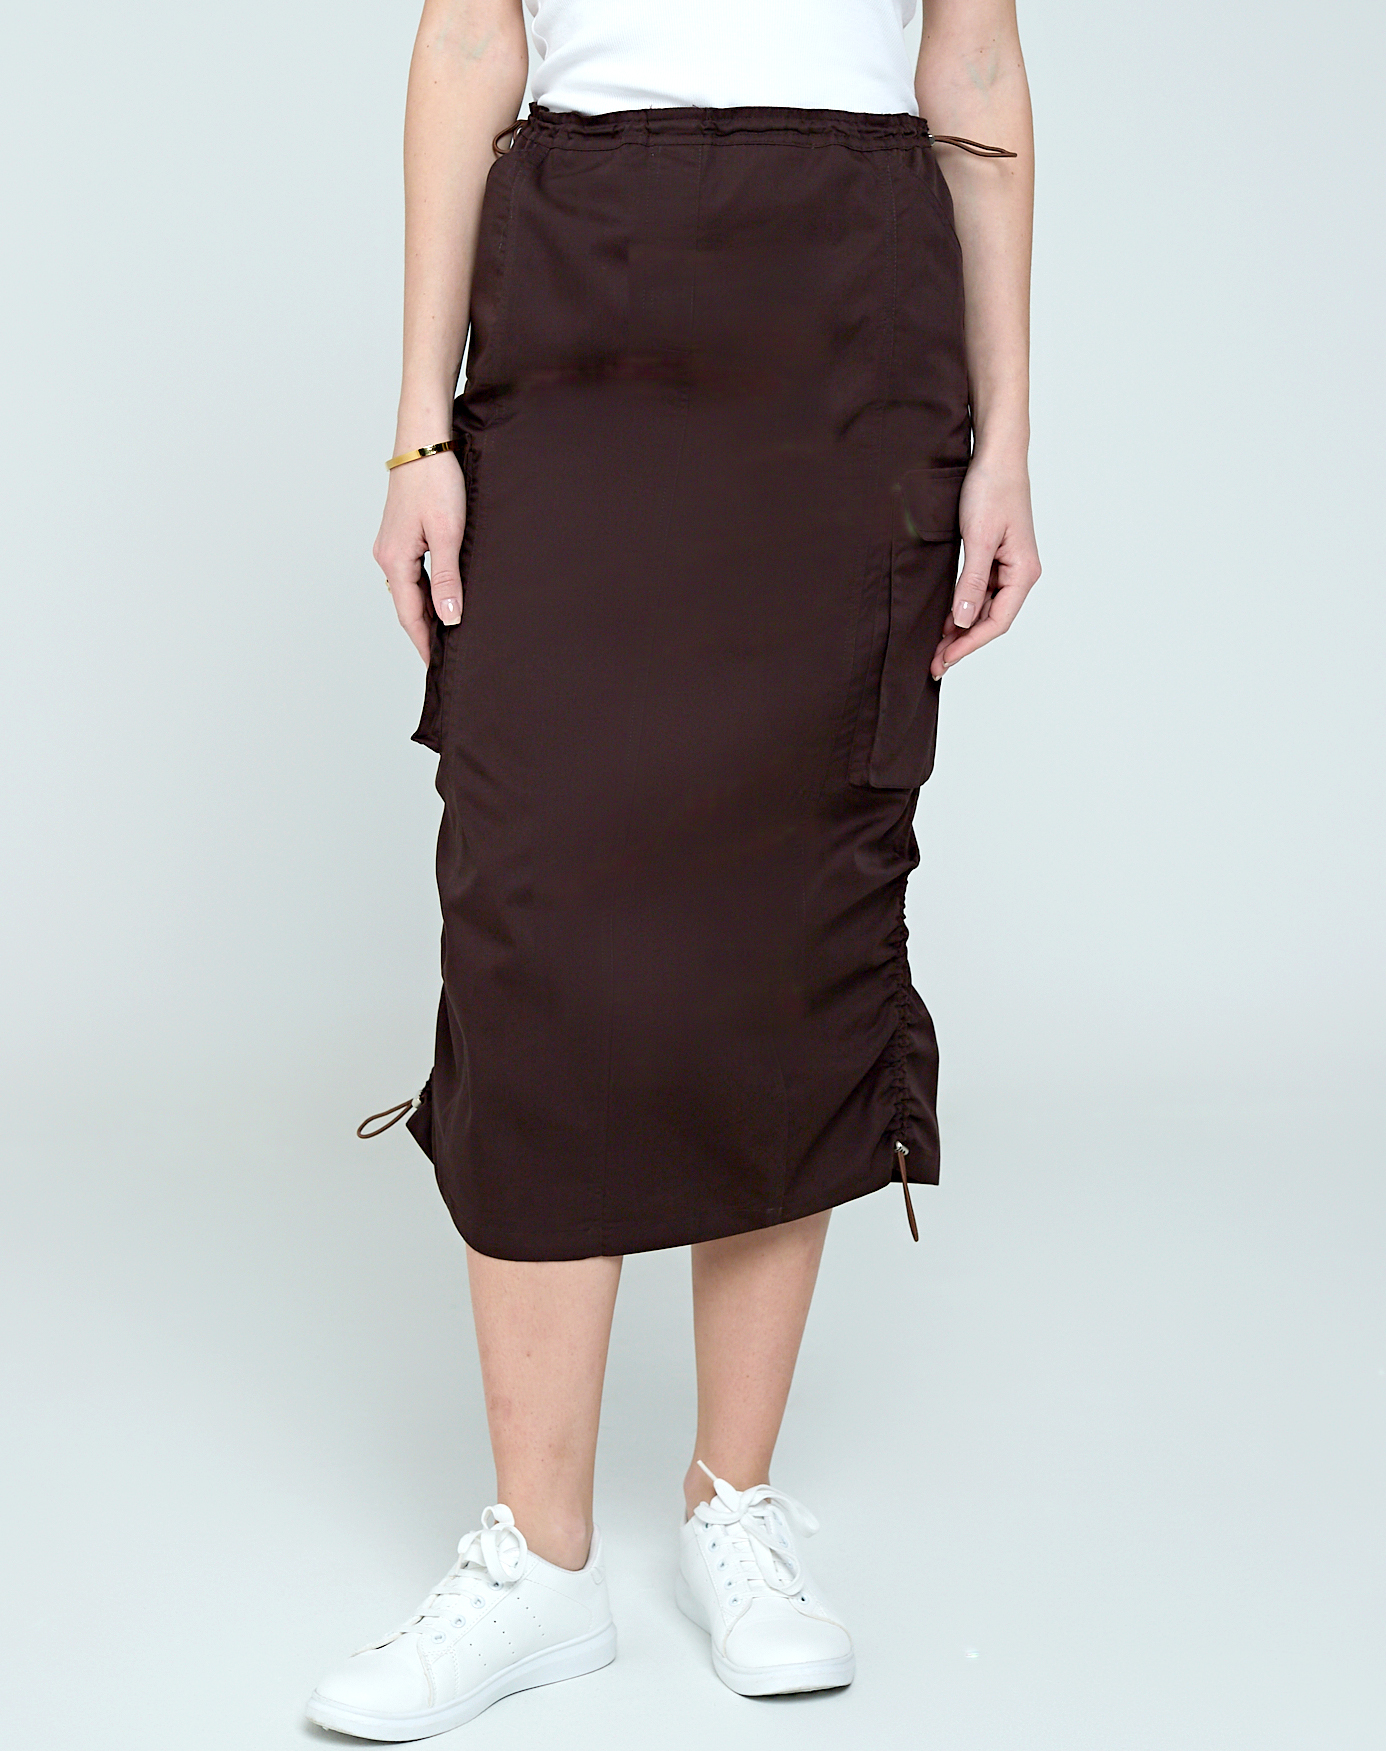 Юбка женская IRINA EGOROVA Cargo Skirt коричневая 46 RU